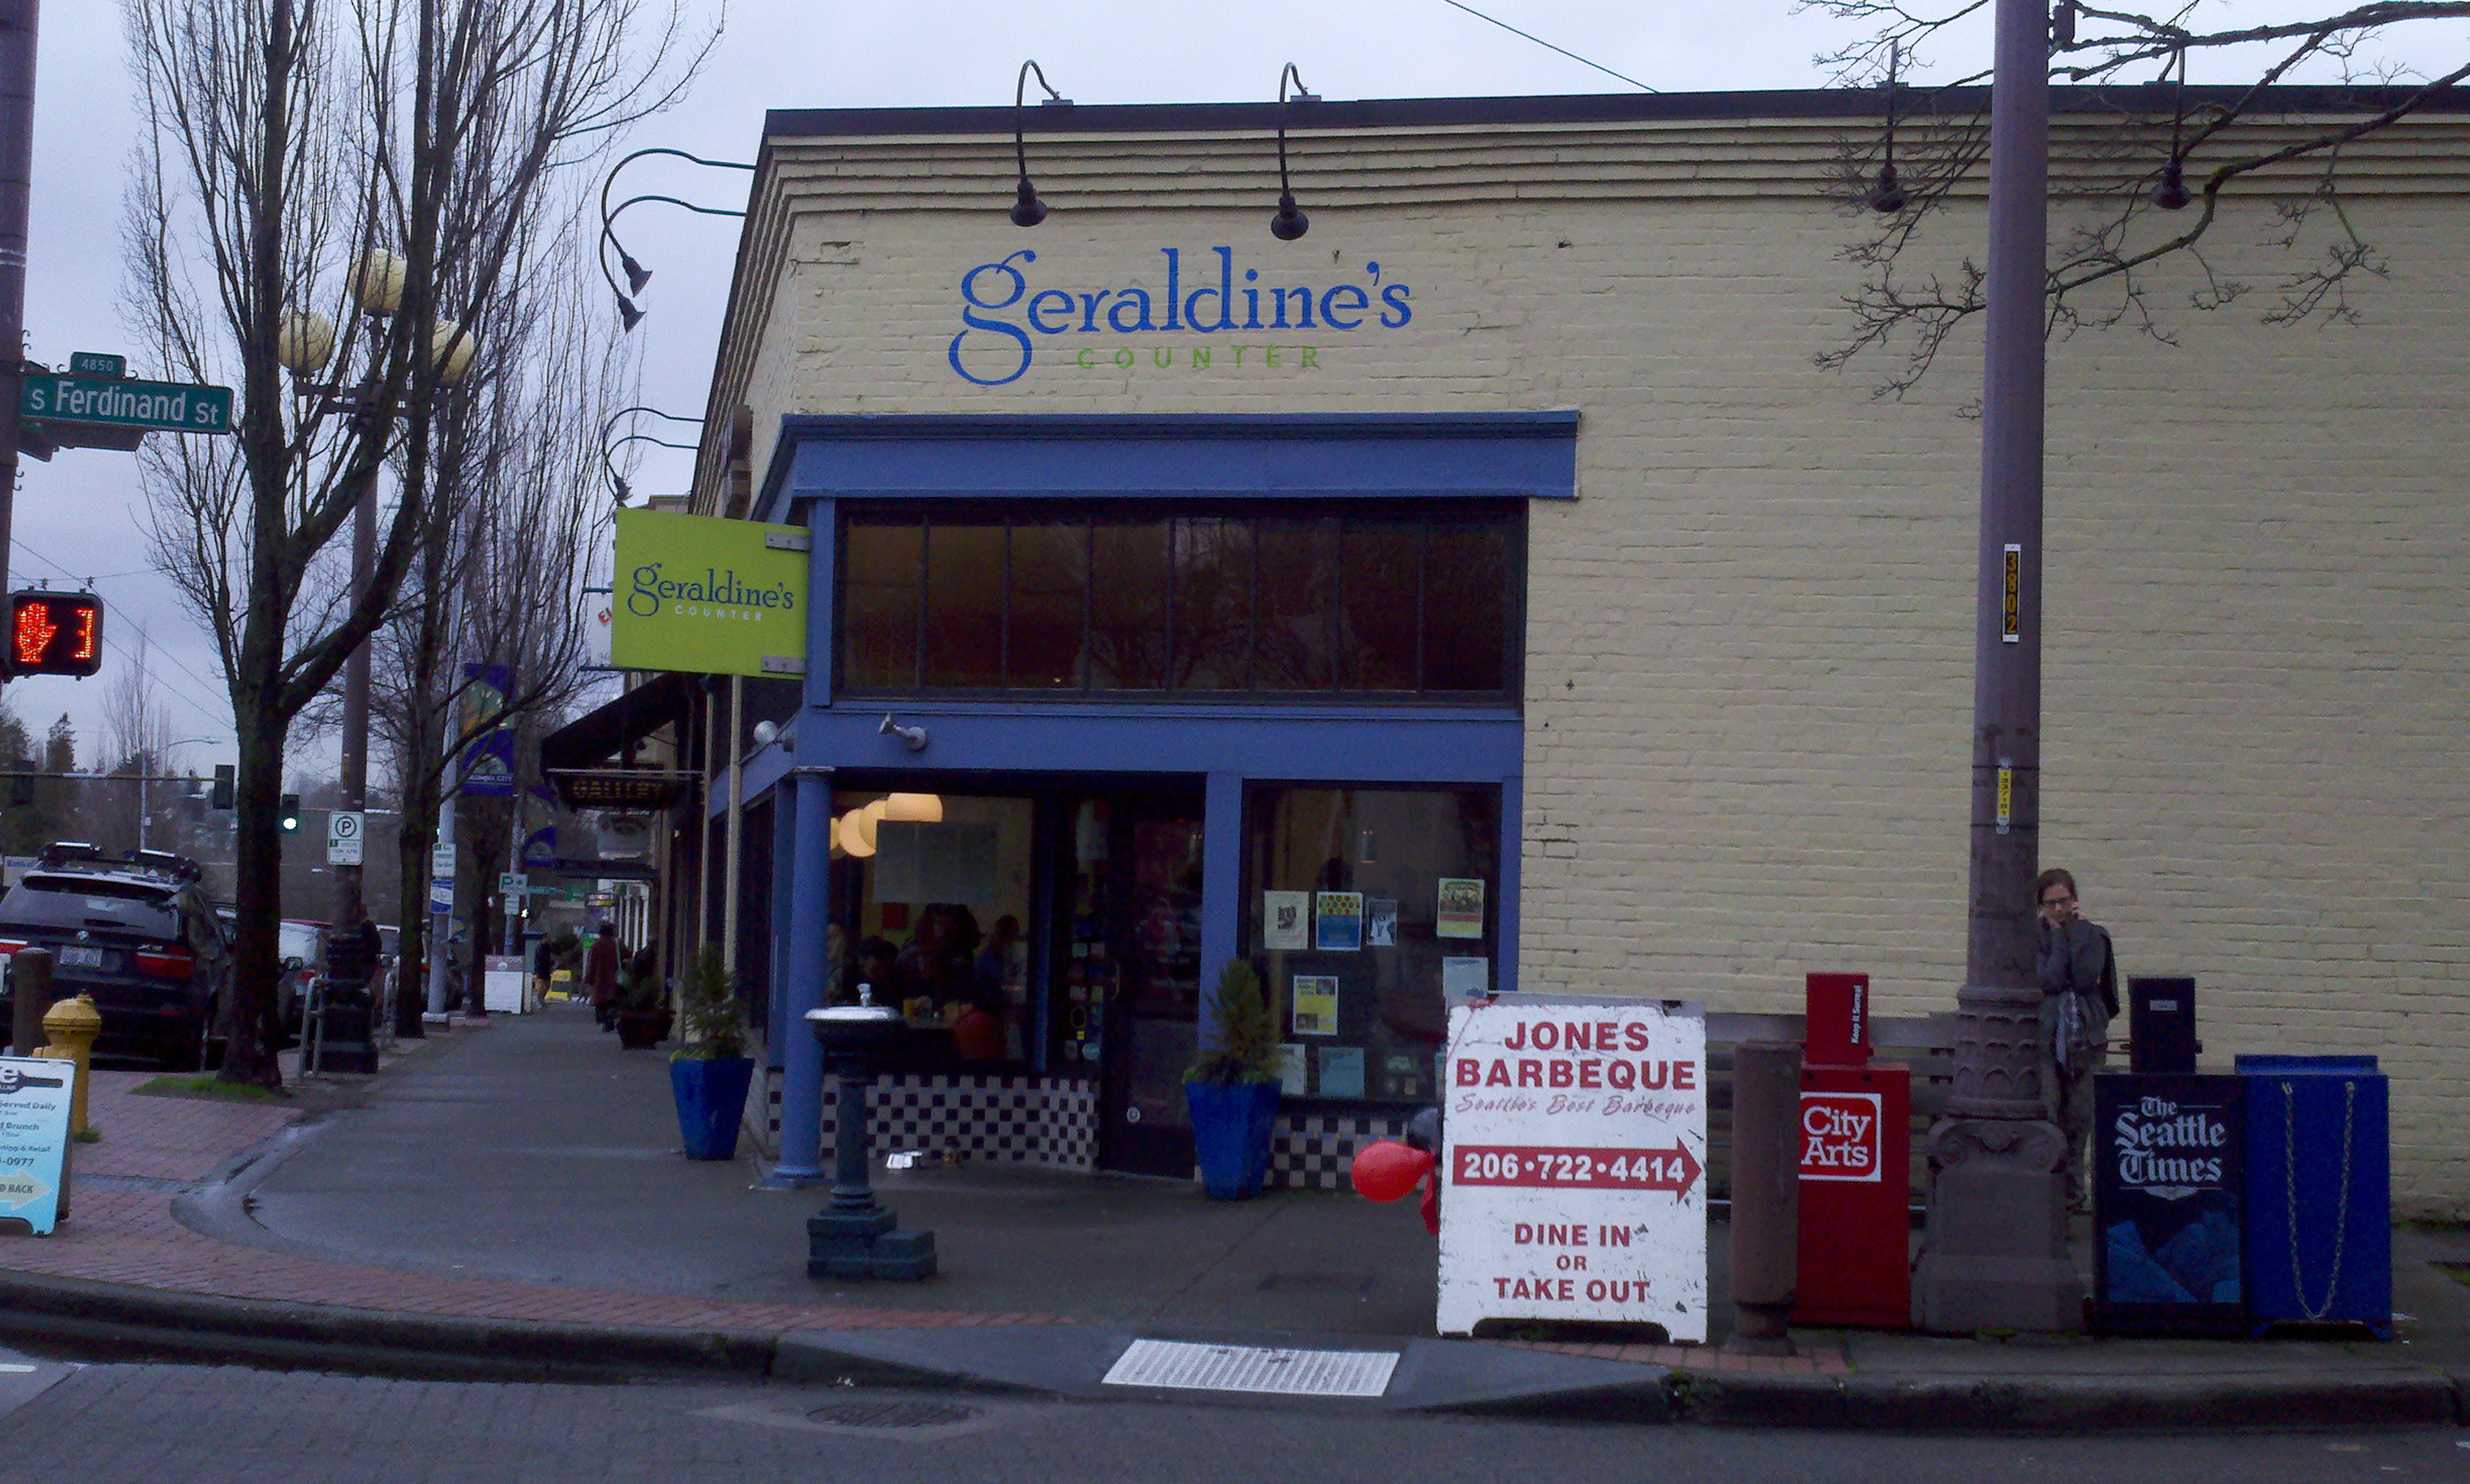 Geraldine’s Counter – Diner in Columbia City